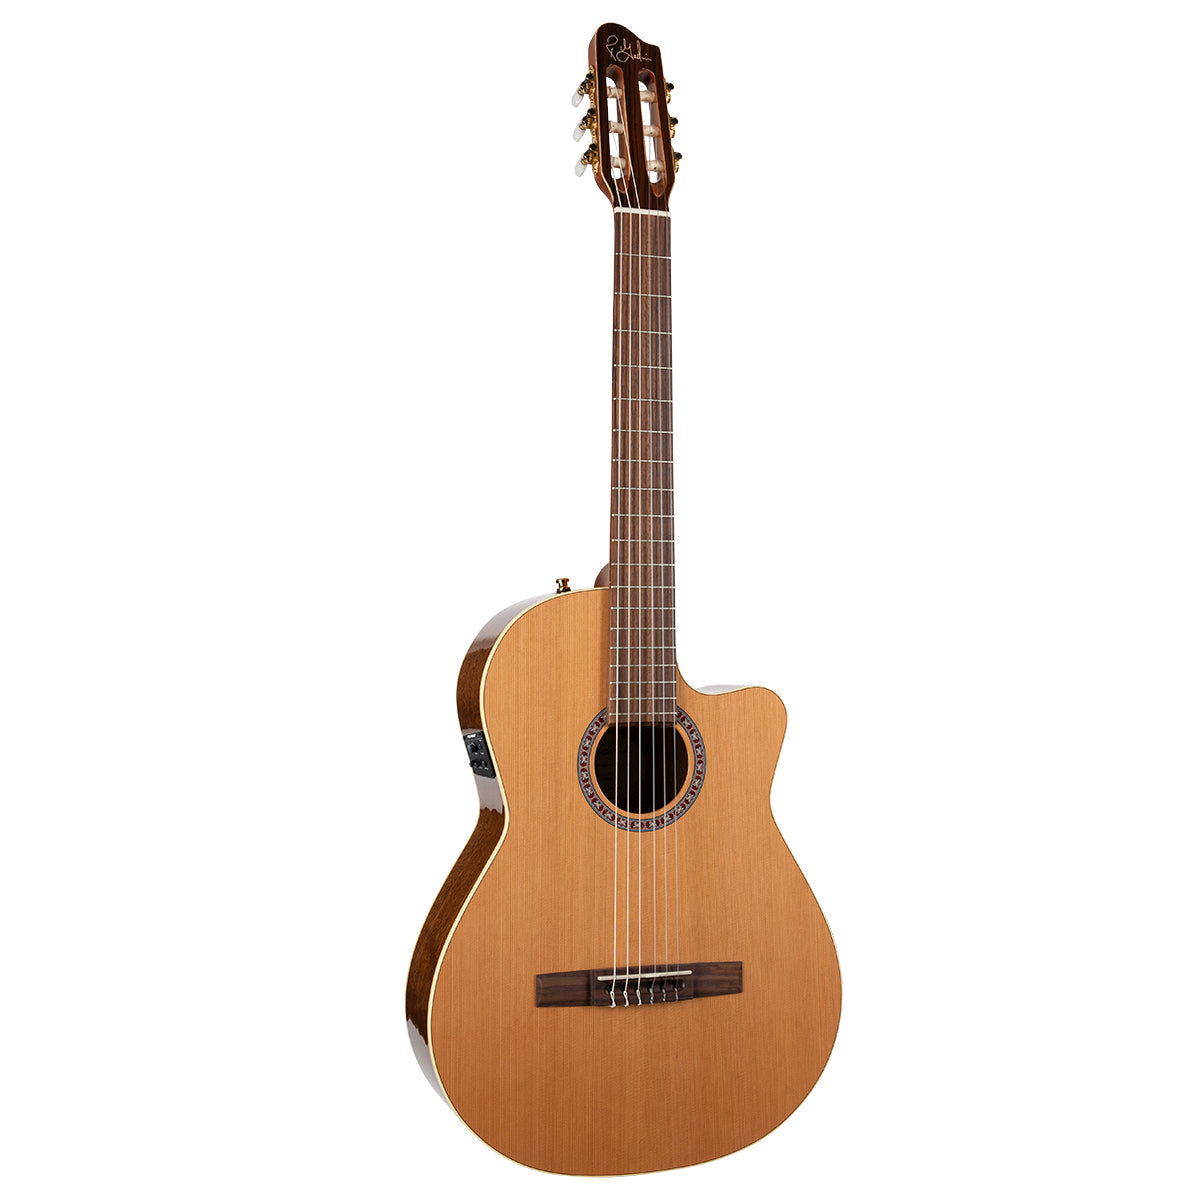 Godin Concert Cutaway Clasica II Nylon String Electro Guitar,  for sale at Richards Guitars.